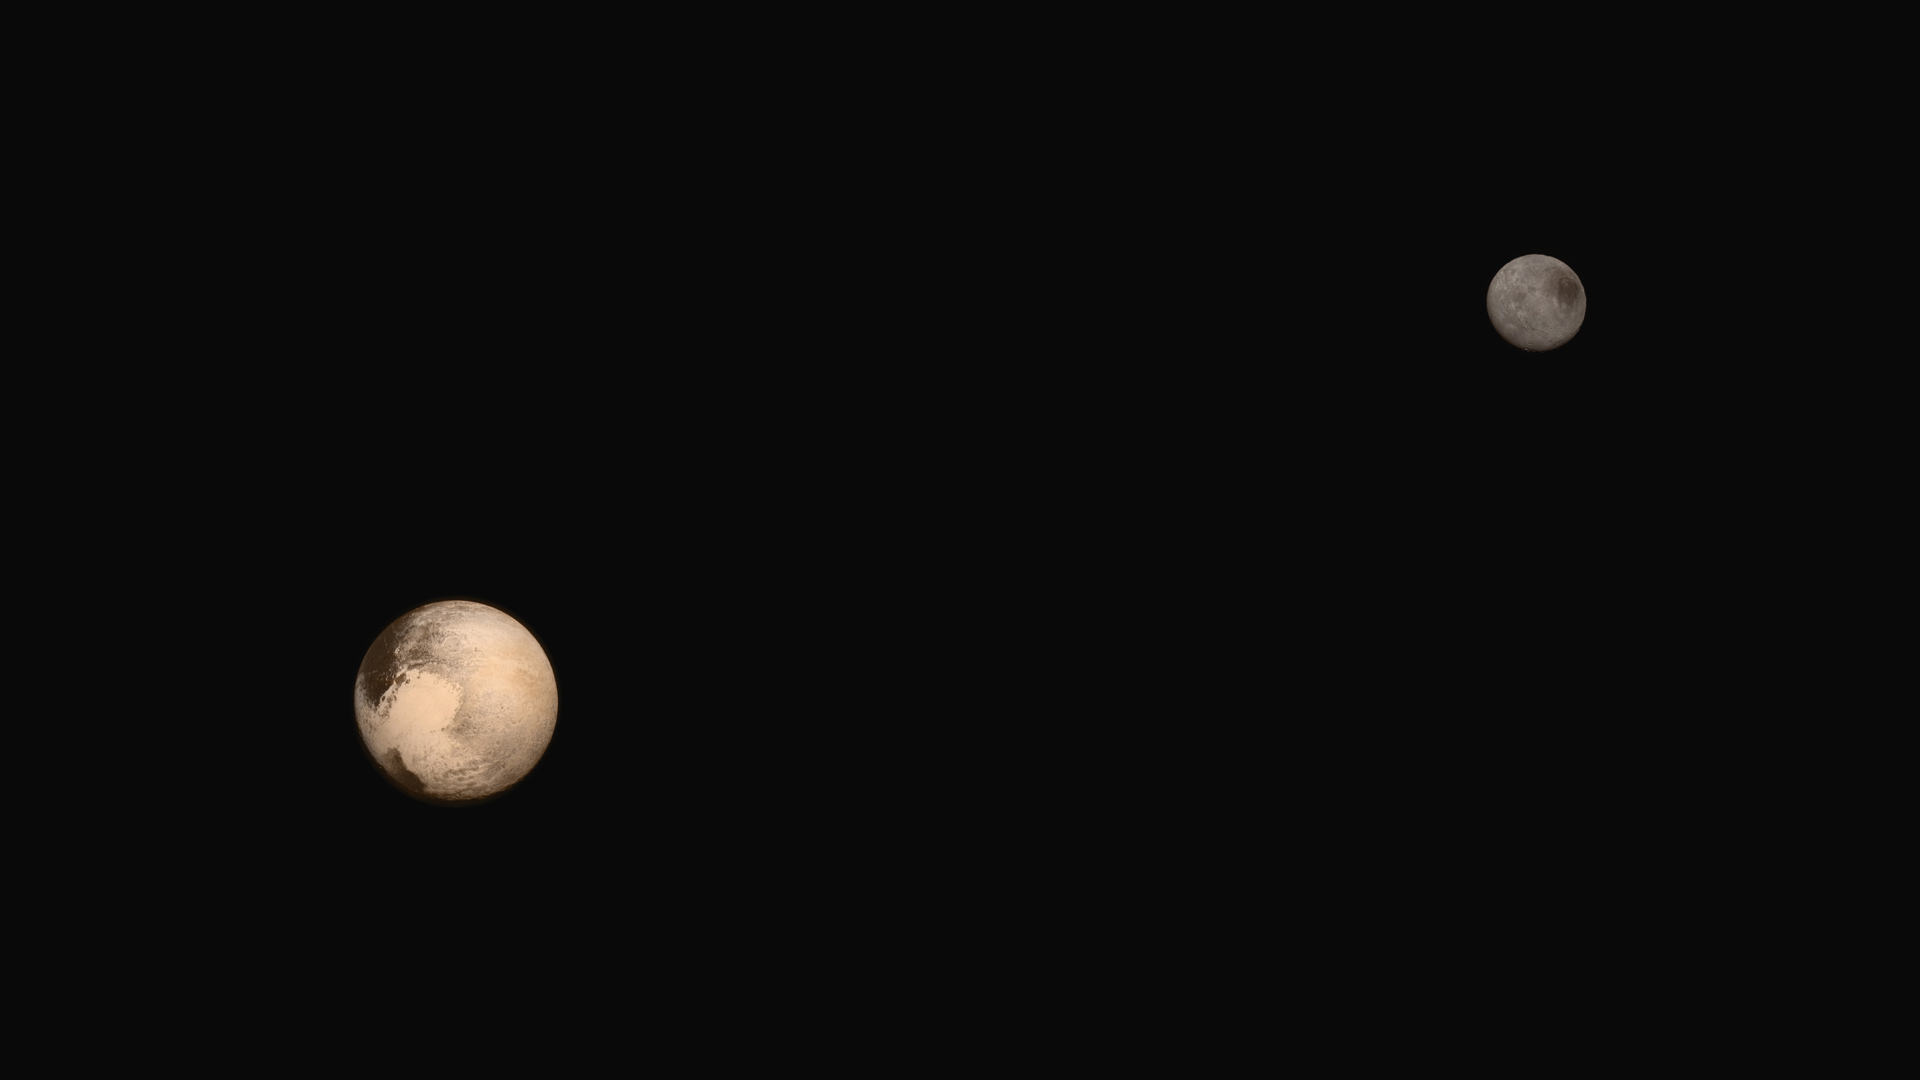 Pluto and its mom Charon